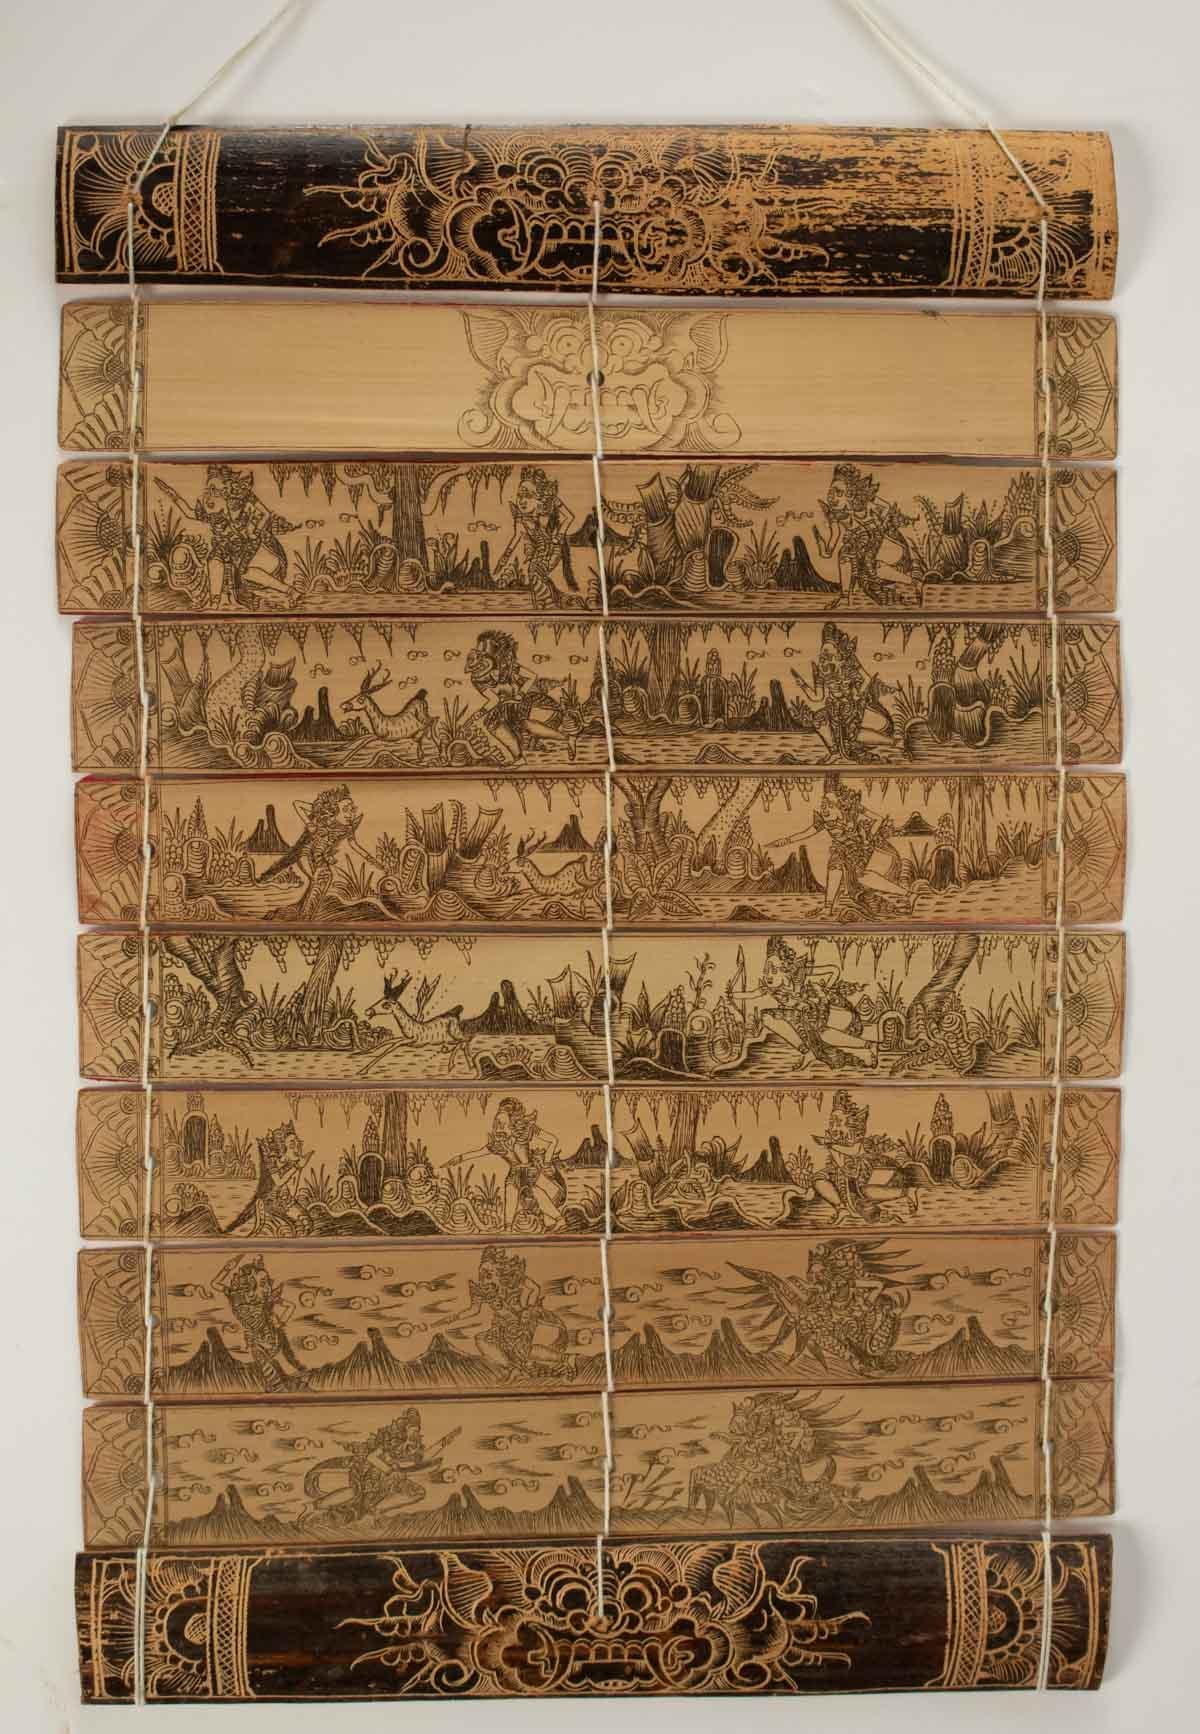 Indonesian etching. 20th Century. 
h: 38cm, l: 25cm
